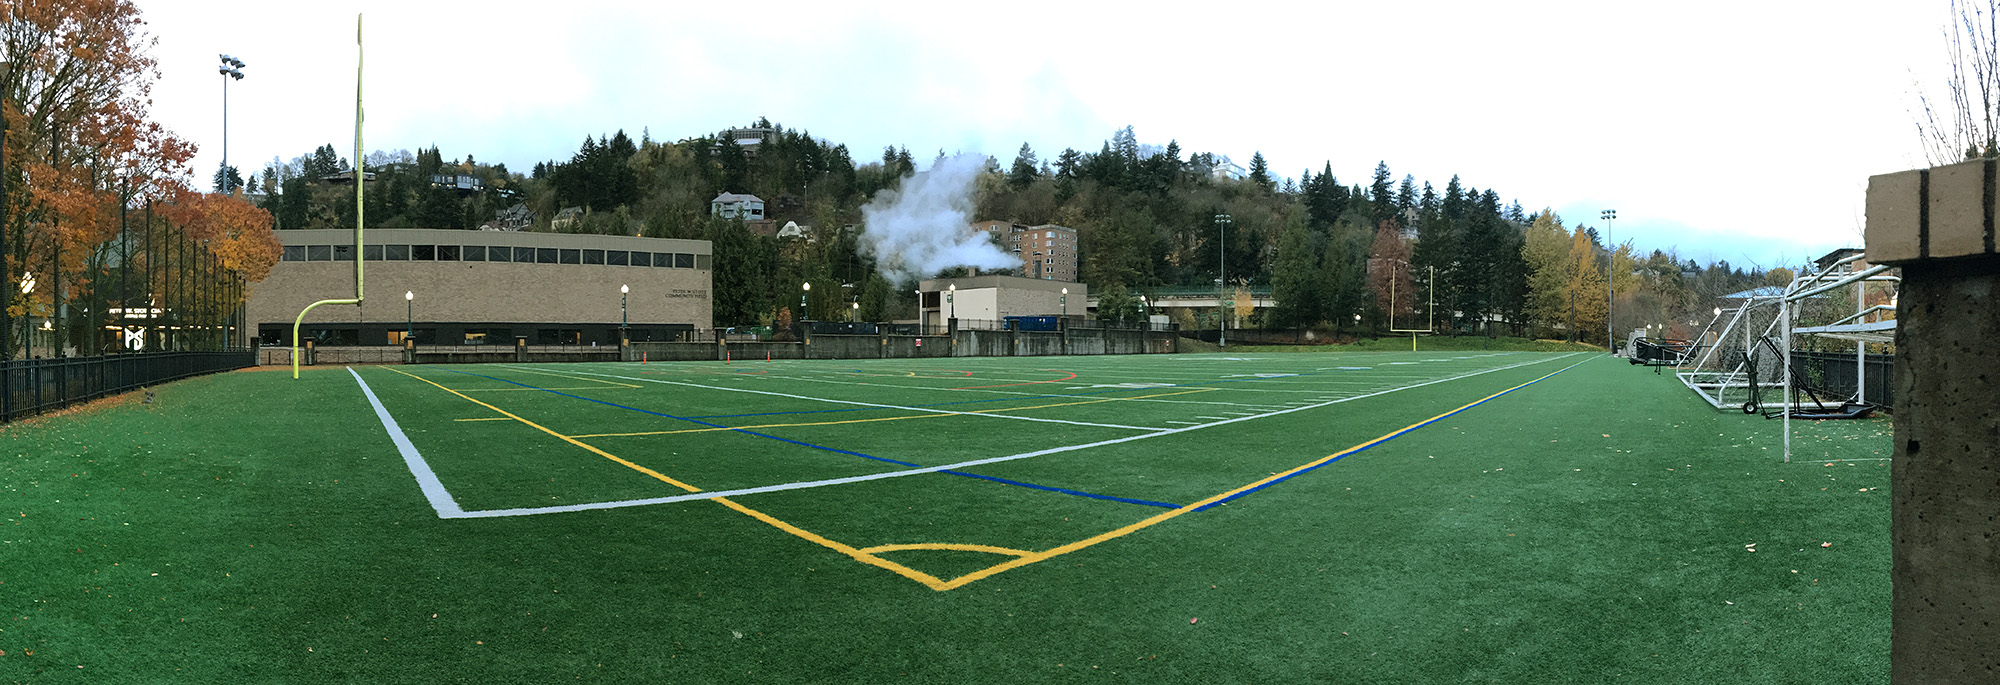 Stott Community Field resembles a football field but is a multi-purpose athletic field.